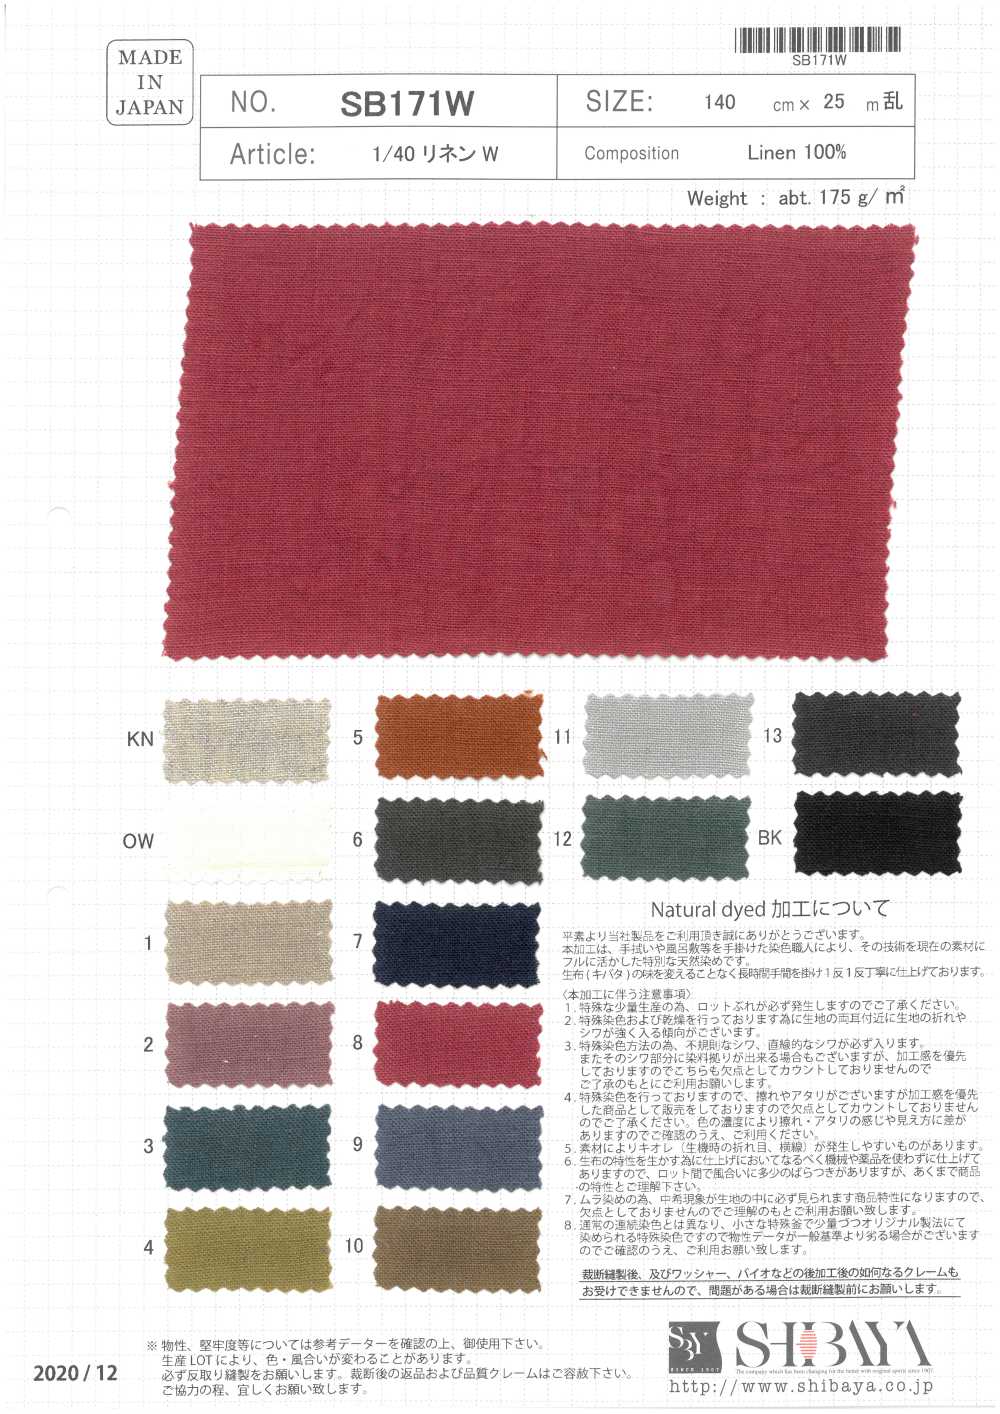 SB171W 1/40 Lin W[Fabrication De Textile] SHIBAYA